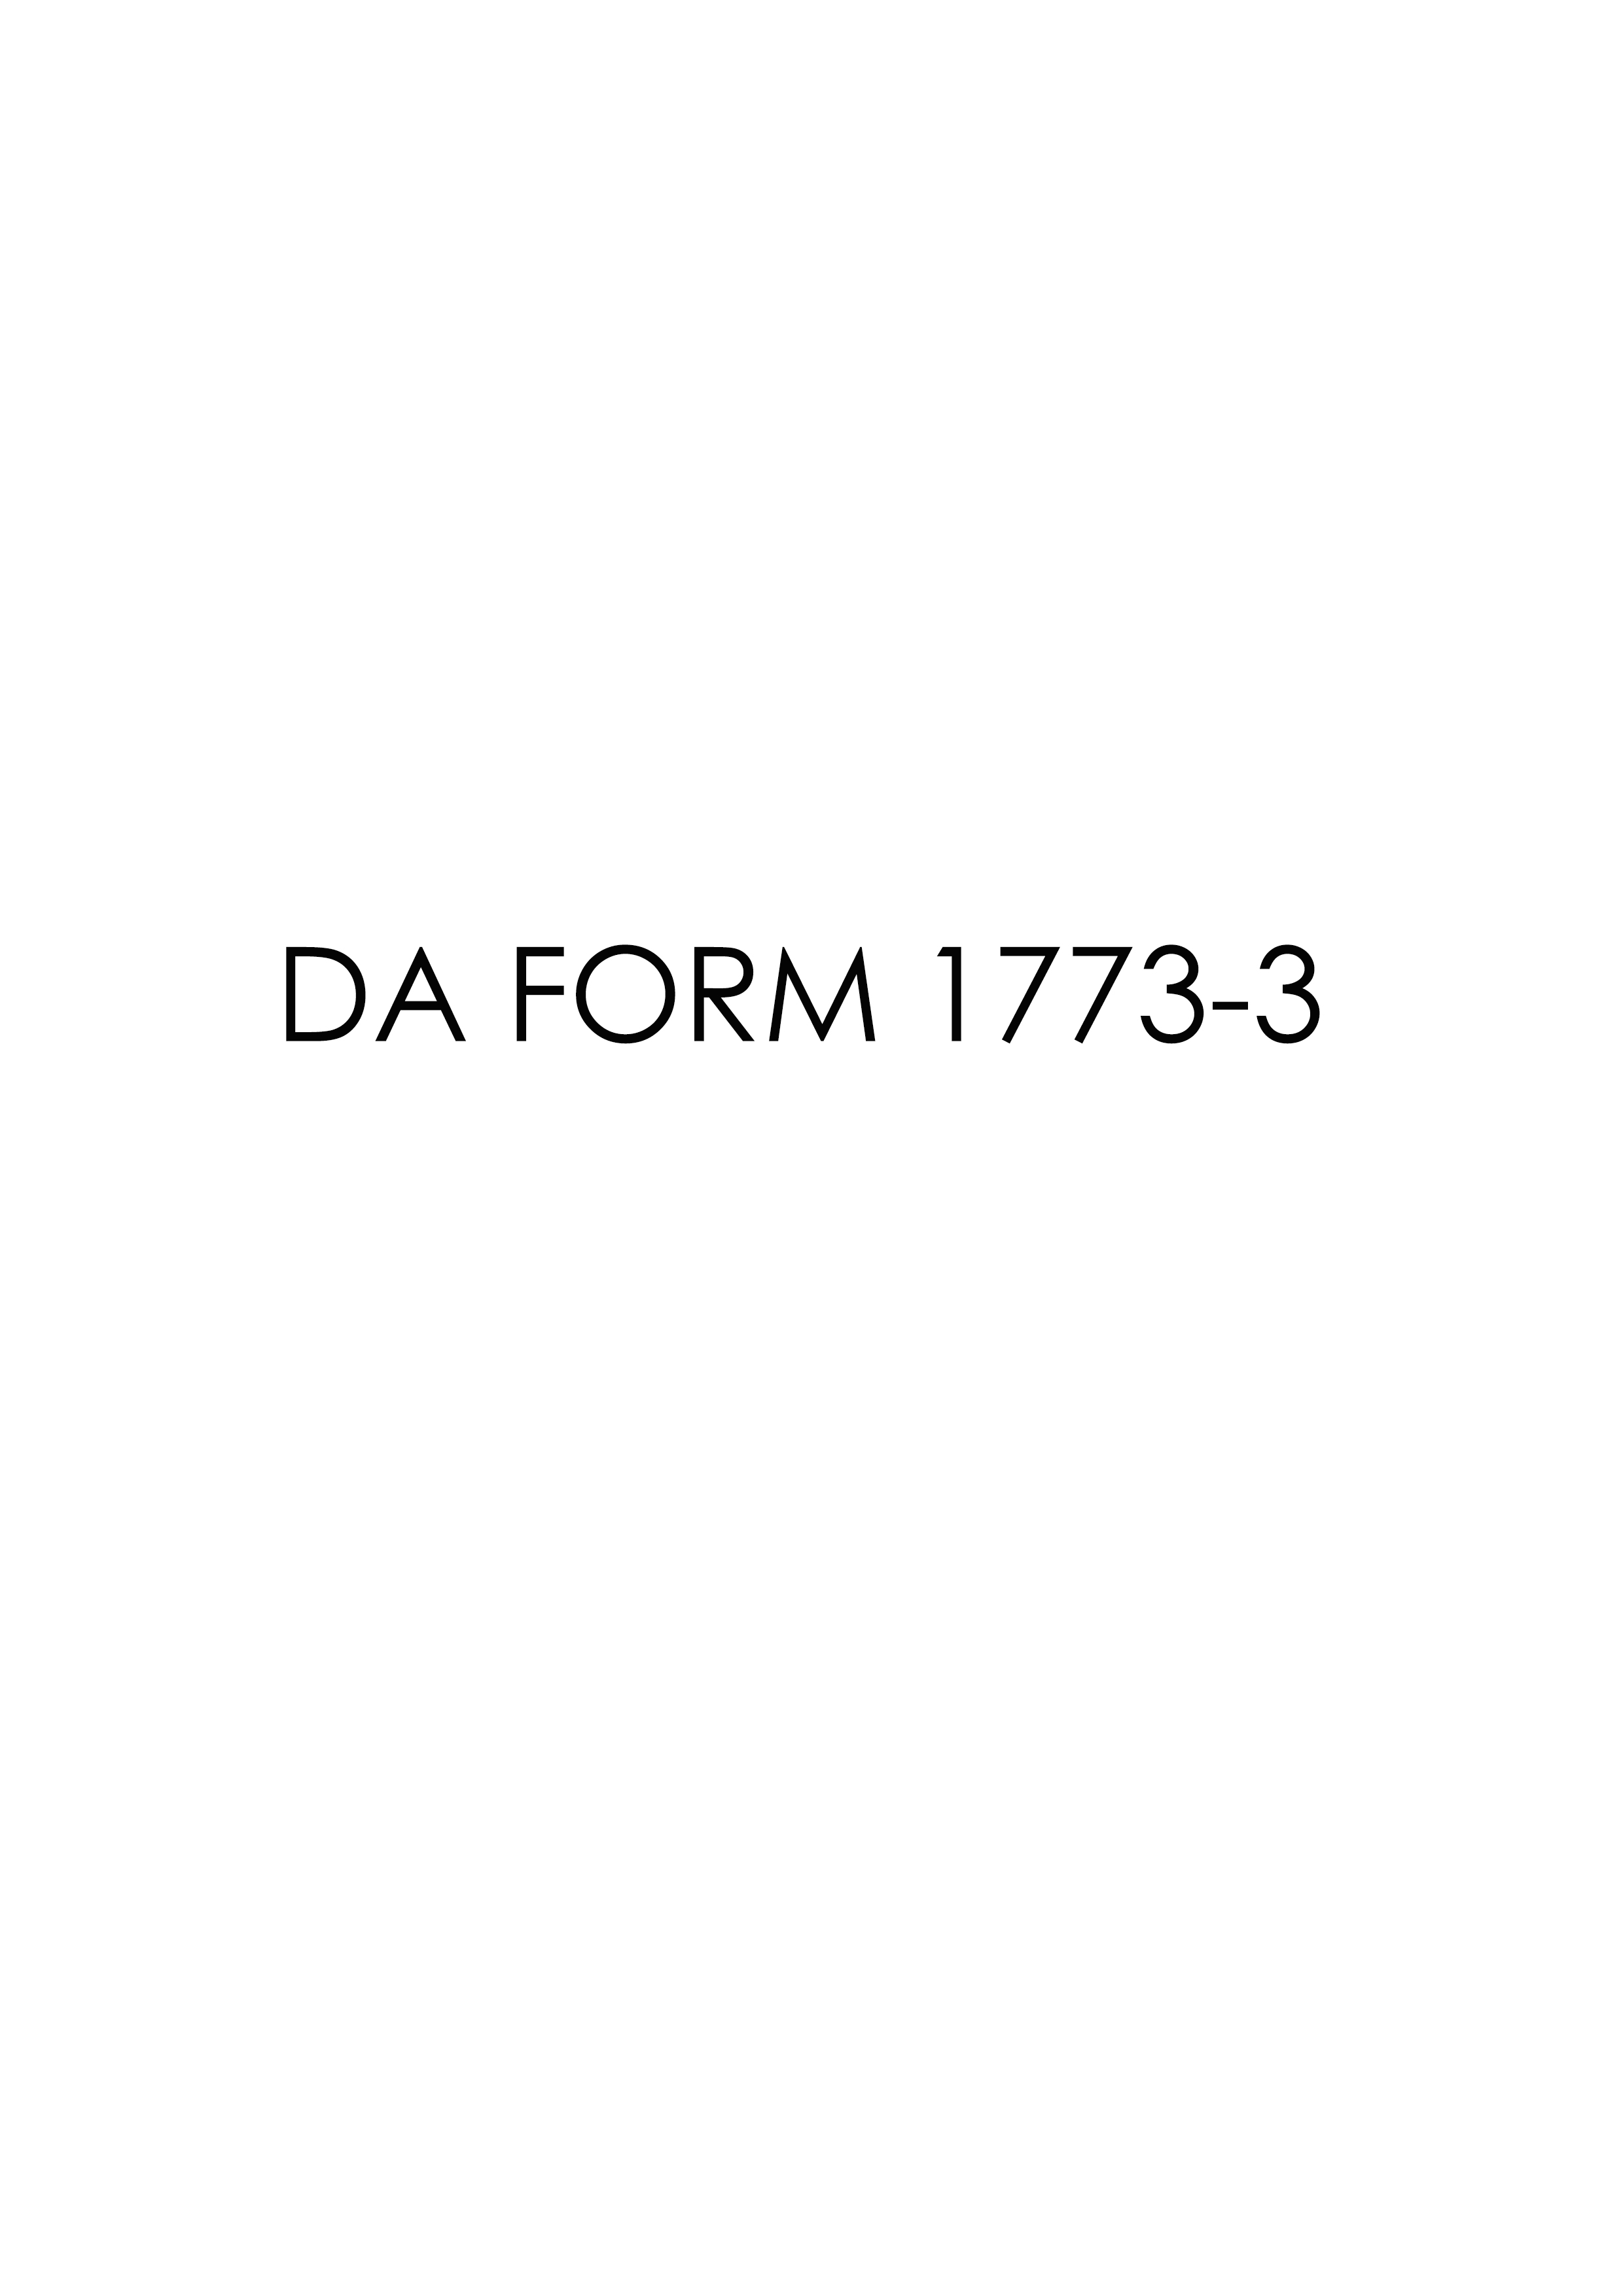 da Form 1773-3 fillable